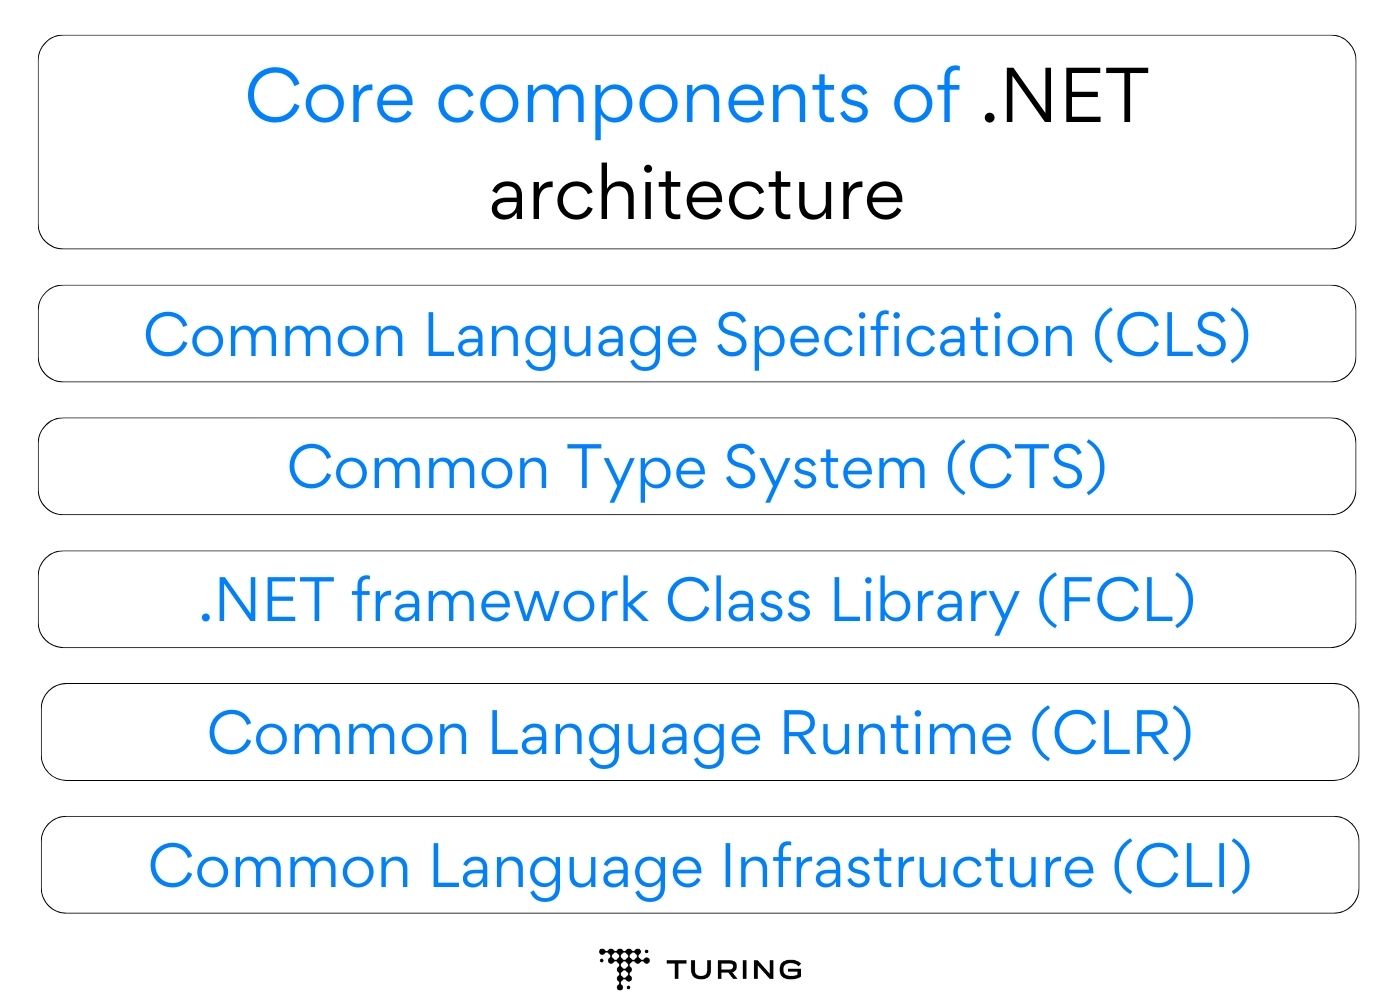 Core components of .NET architecture